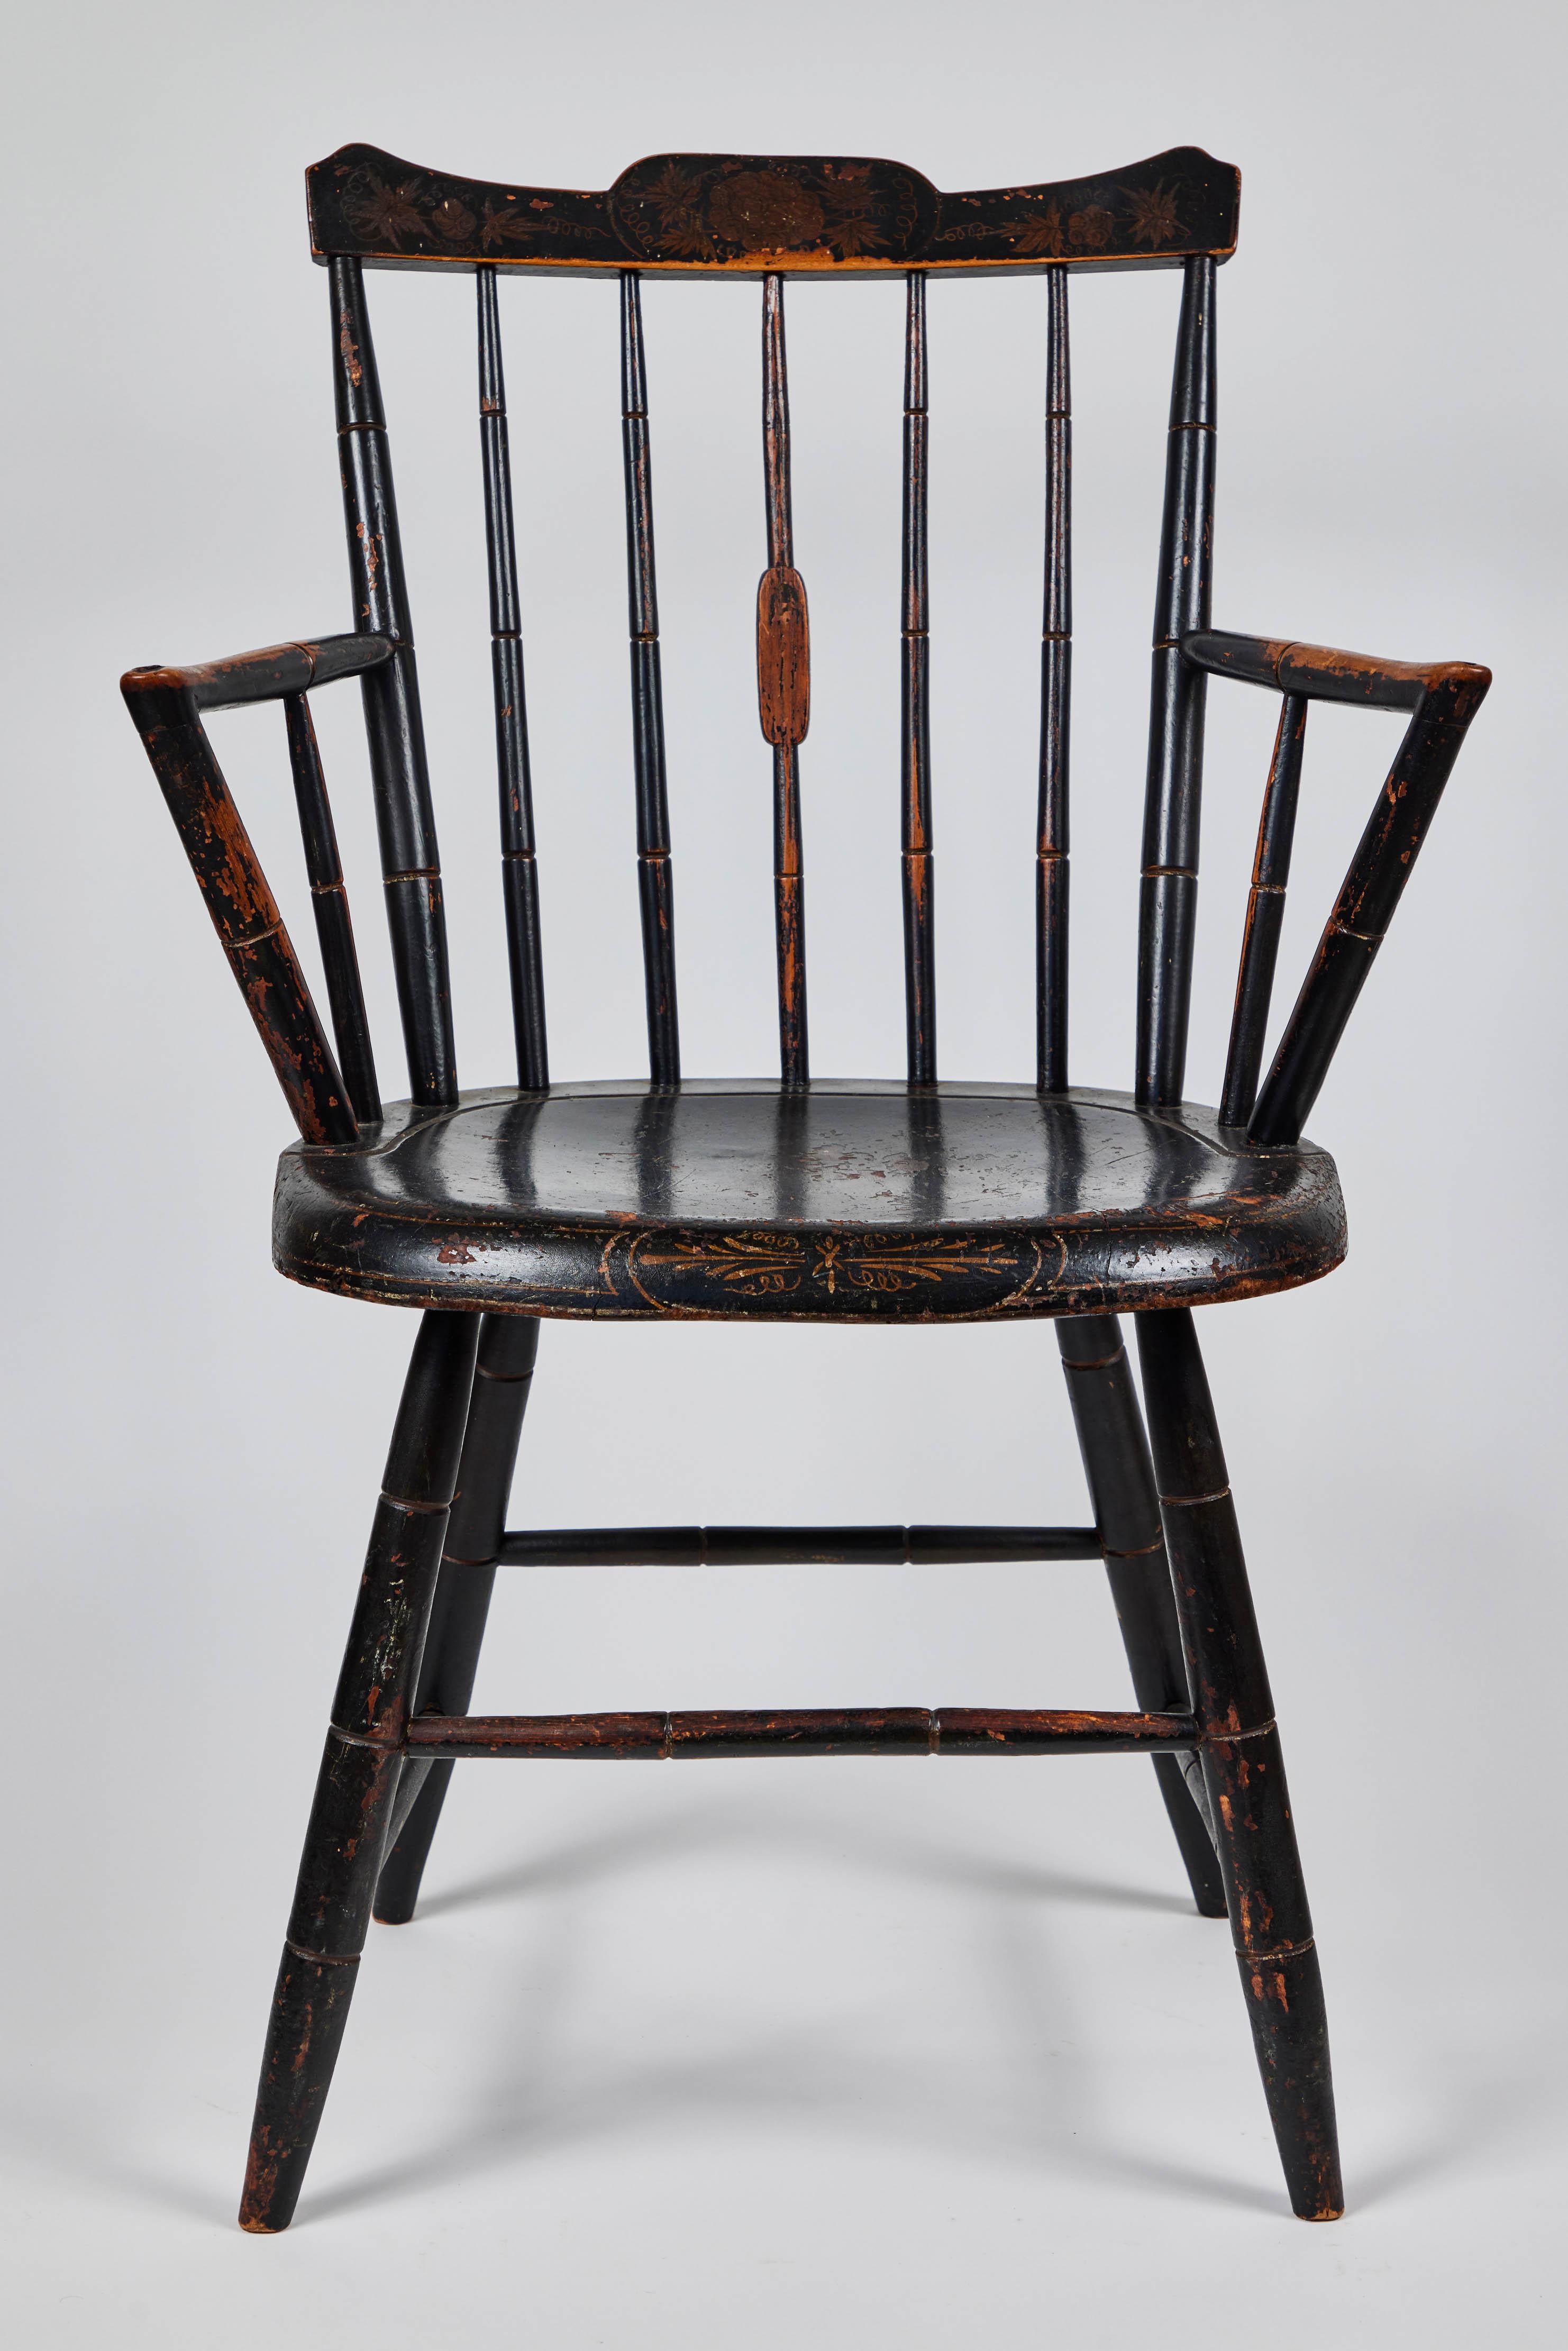 Antique stencil back windsor chairs, original federal paint

c. 1790- 1830.